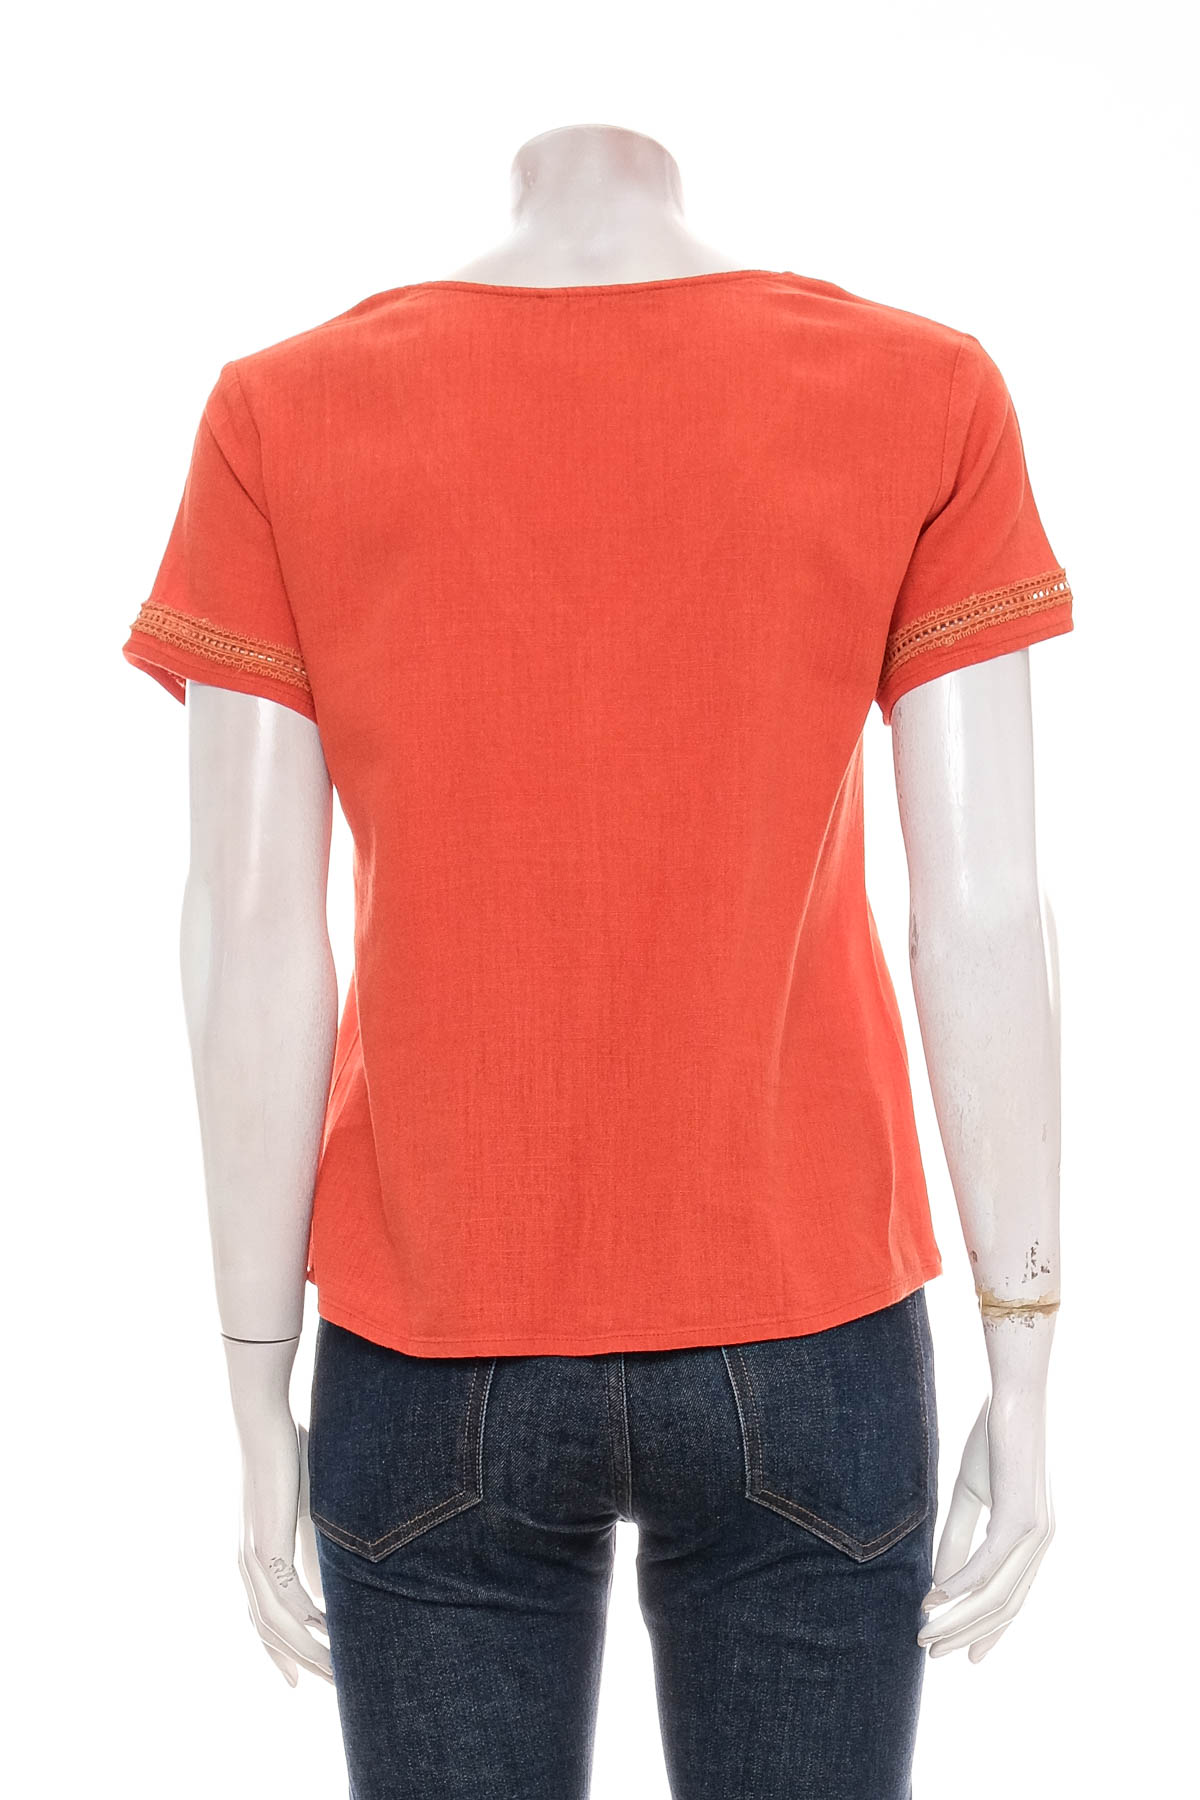 Women's shirt - Freeman T. Porter - 1